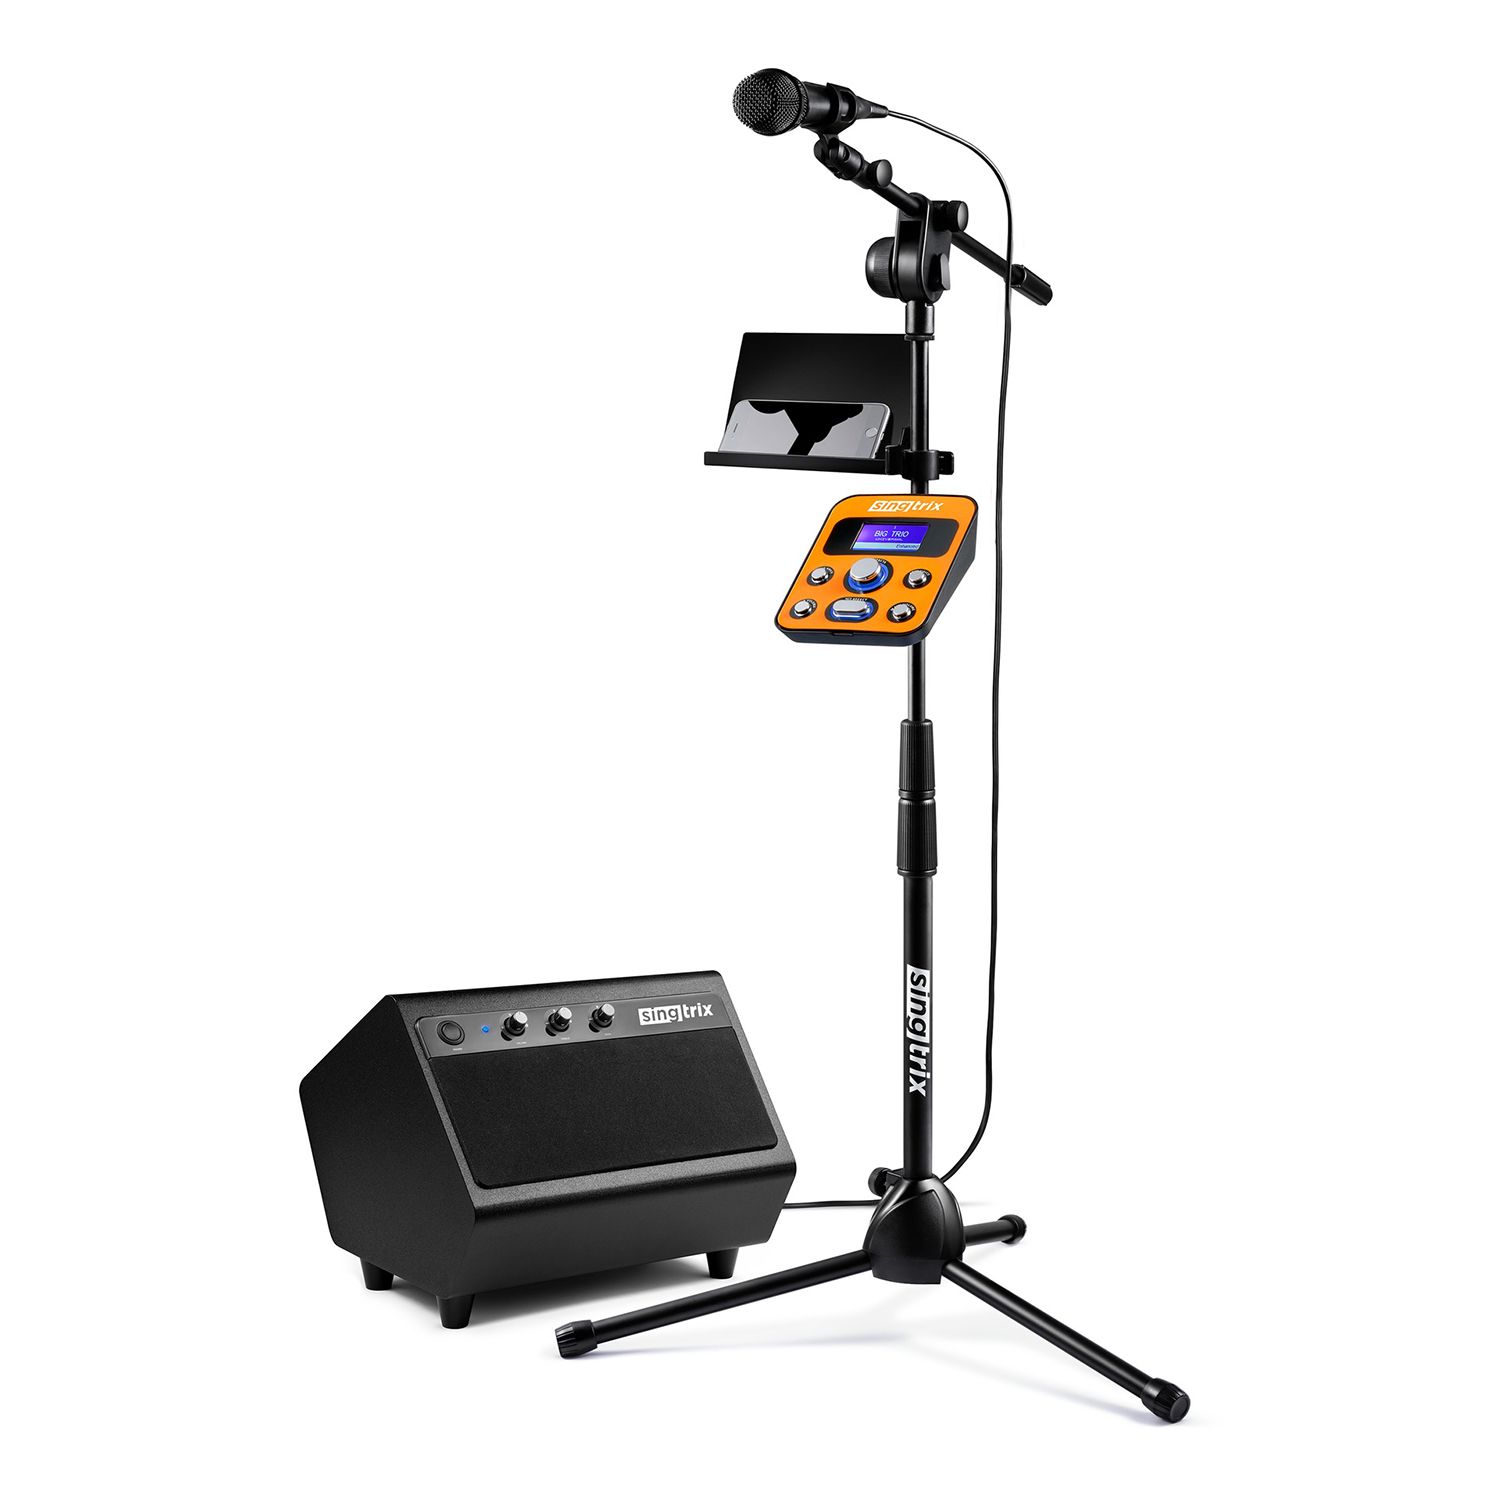 Singtrix Party Bundle with Bonus Microphone, The Most Advanced Karaoke System